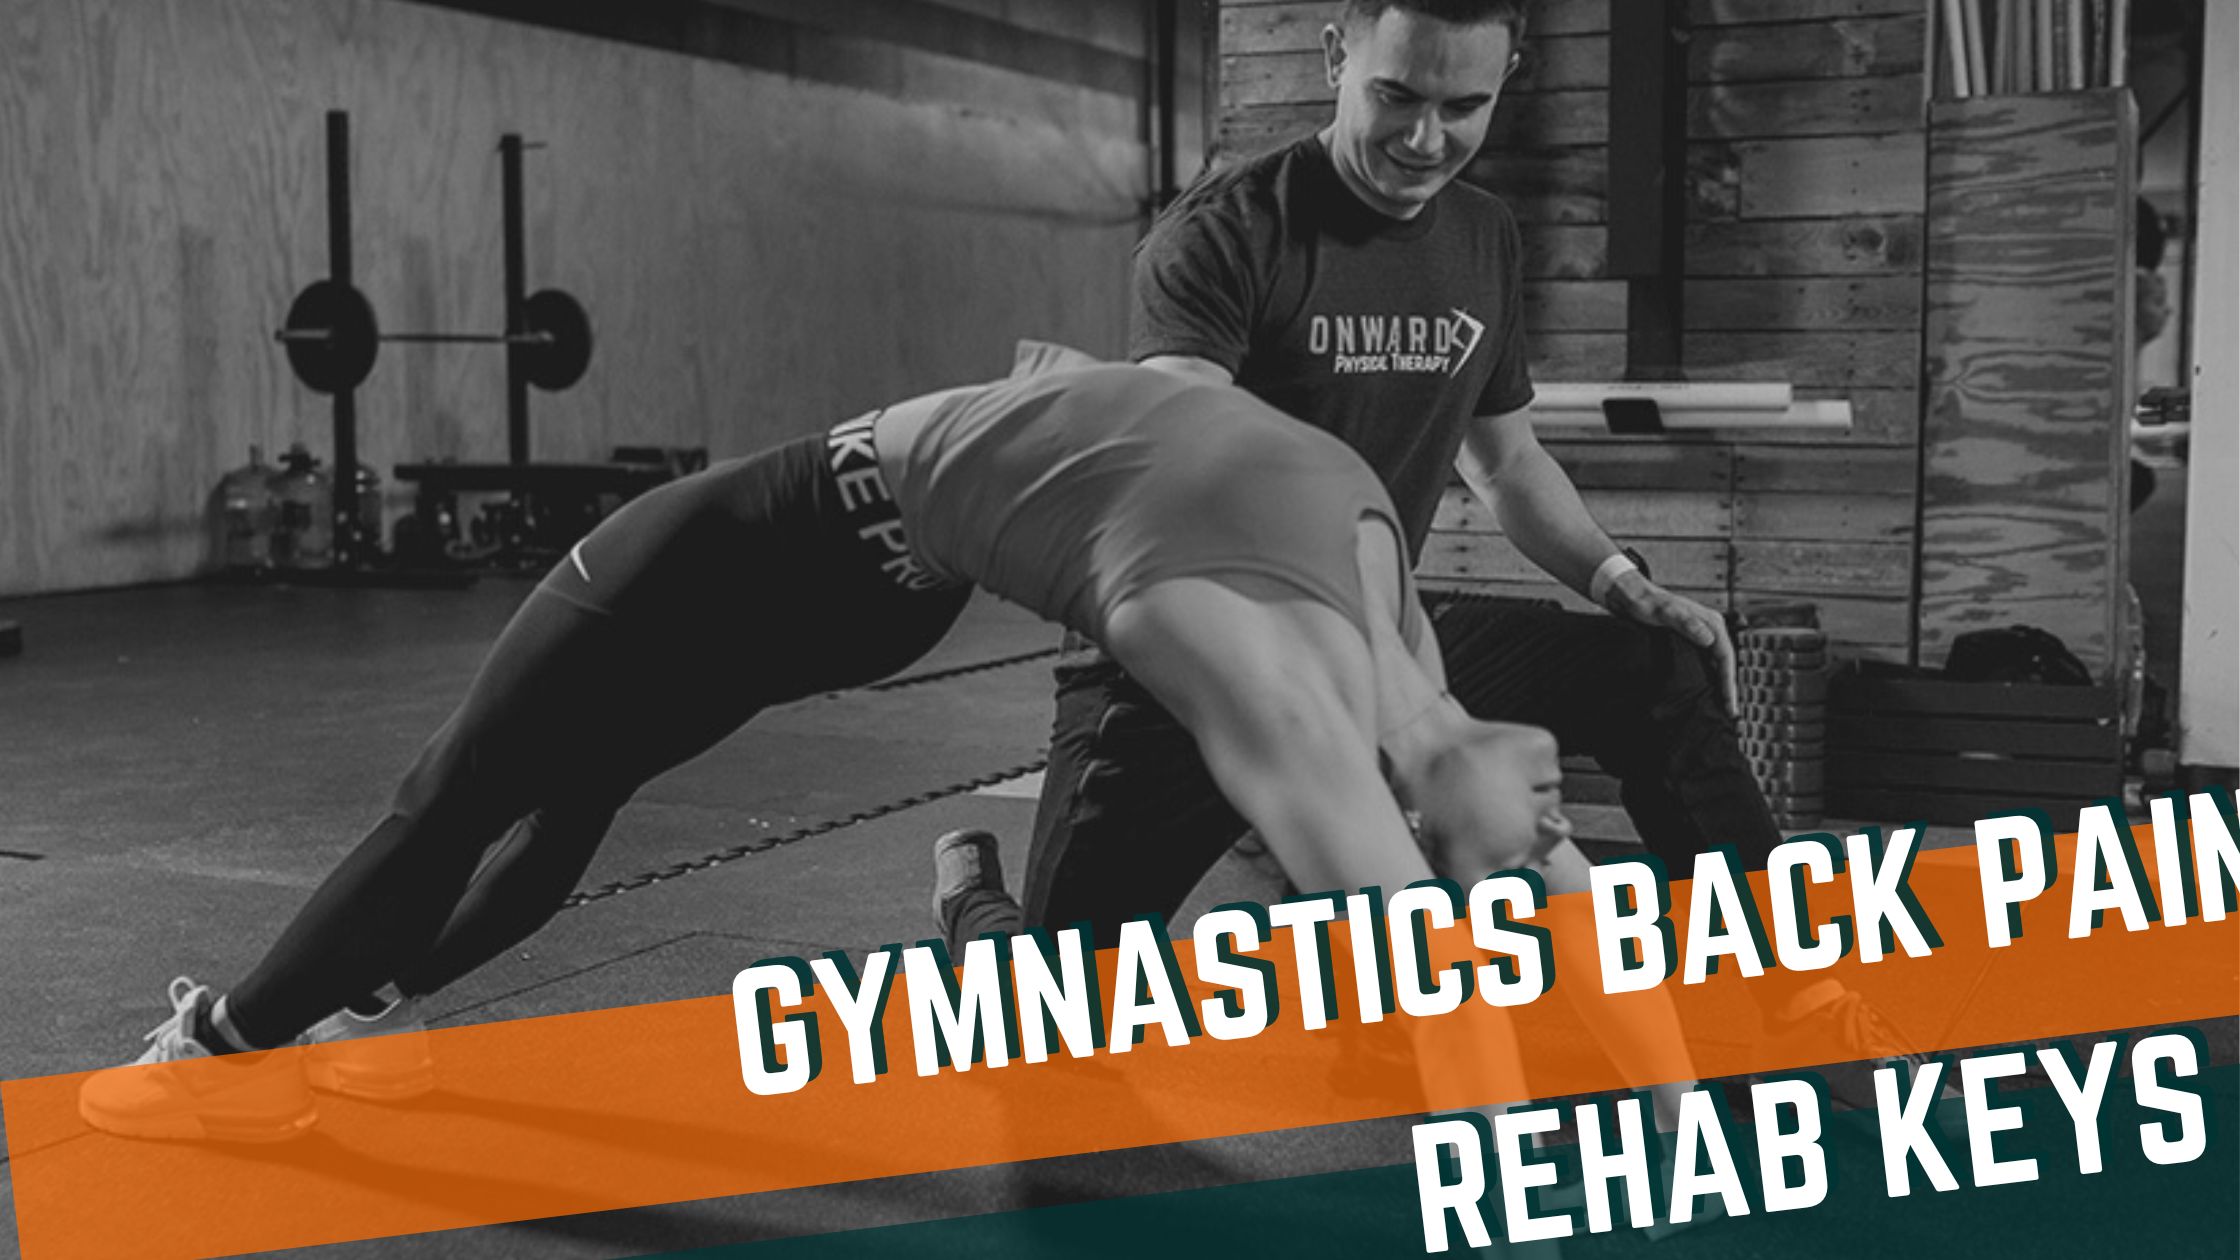 Featured image for “Gymnastics Back Pain Rehab Keys”